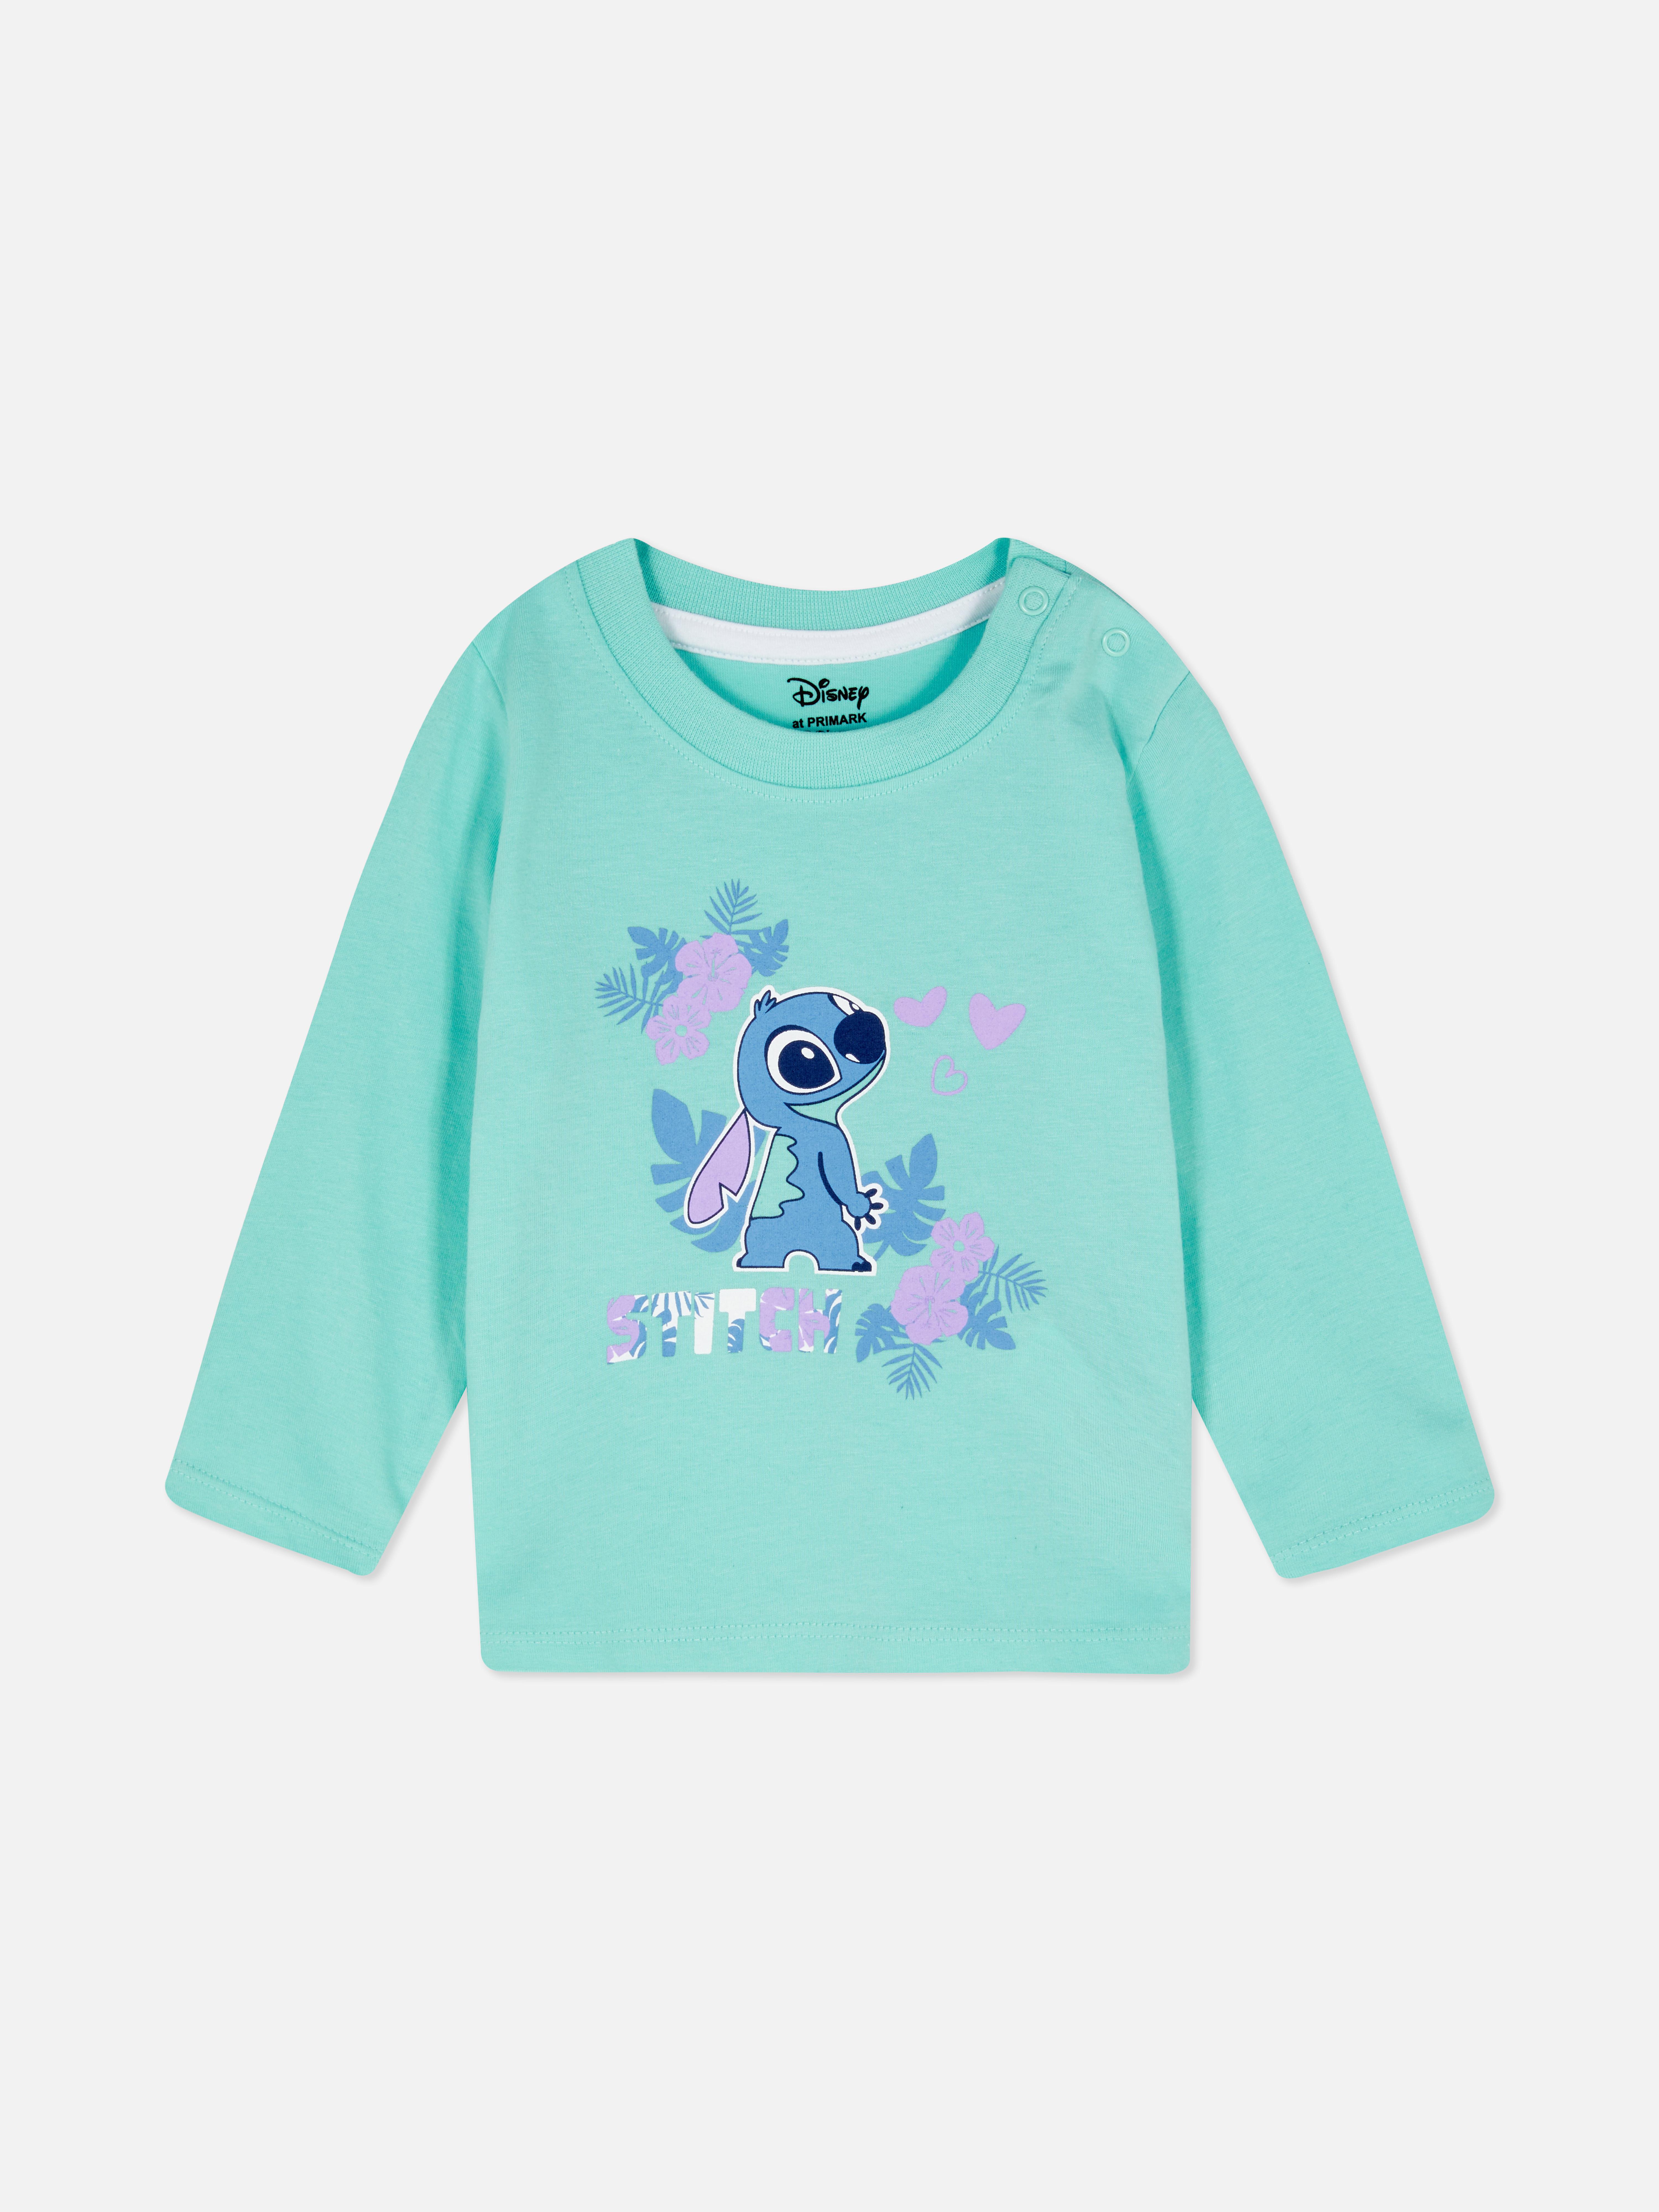 Disney’s Lilo & Stitch Long Sleeve T-shirt